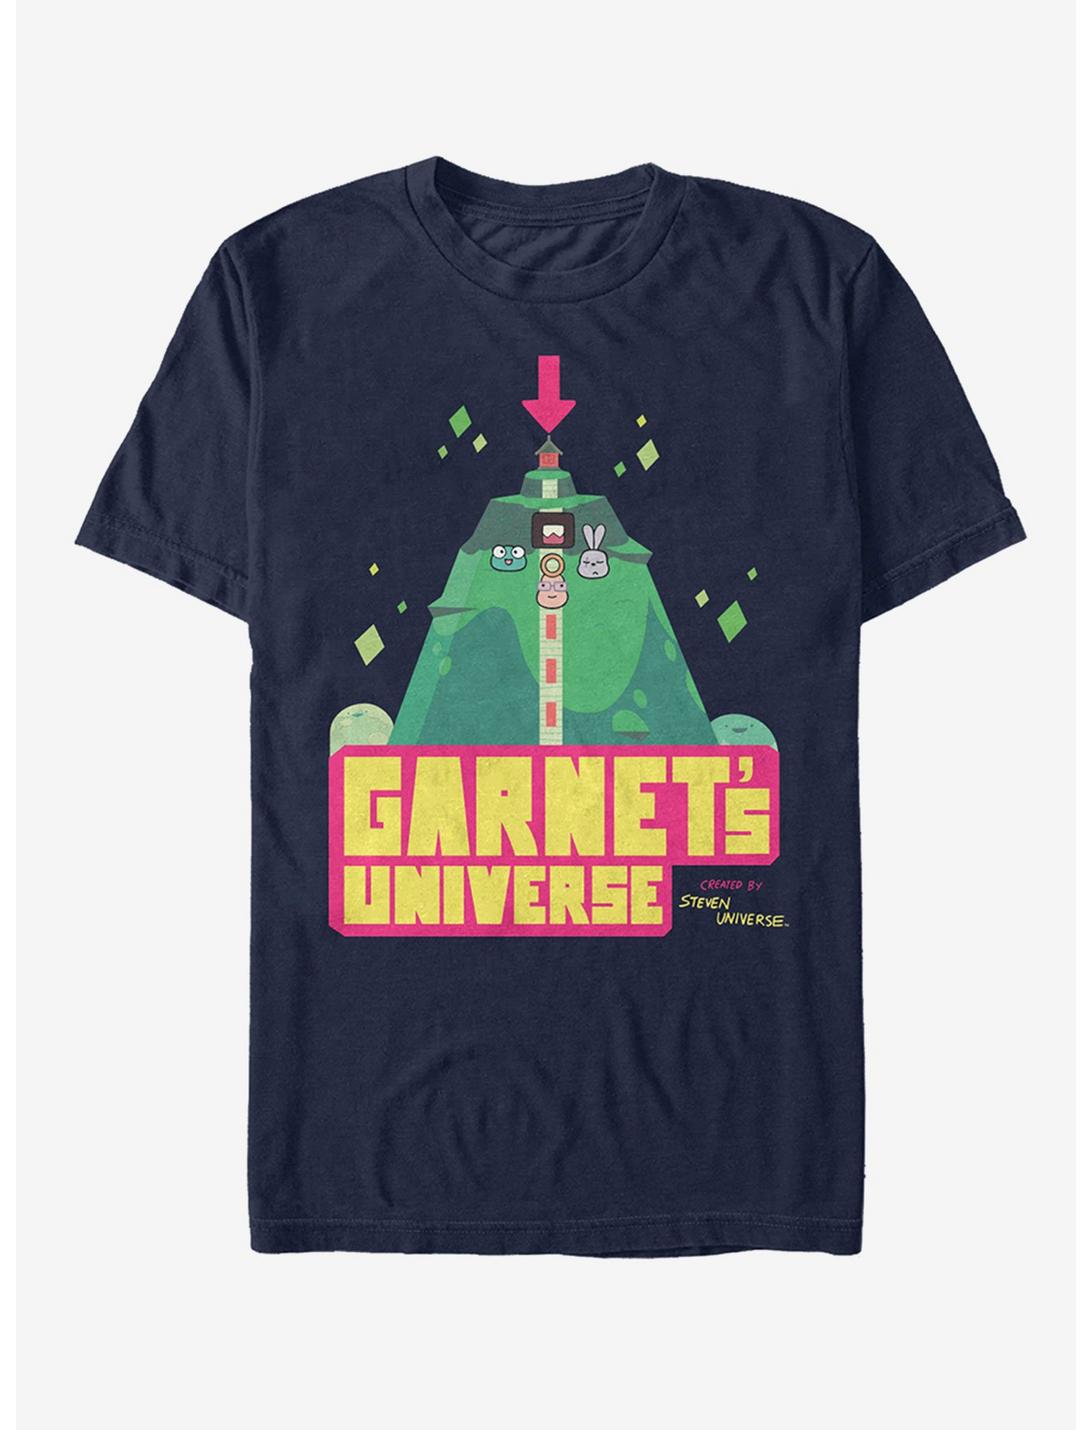 Steven Universe Garnet's Universe T-Shirt, NAVY, hi-res